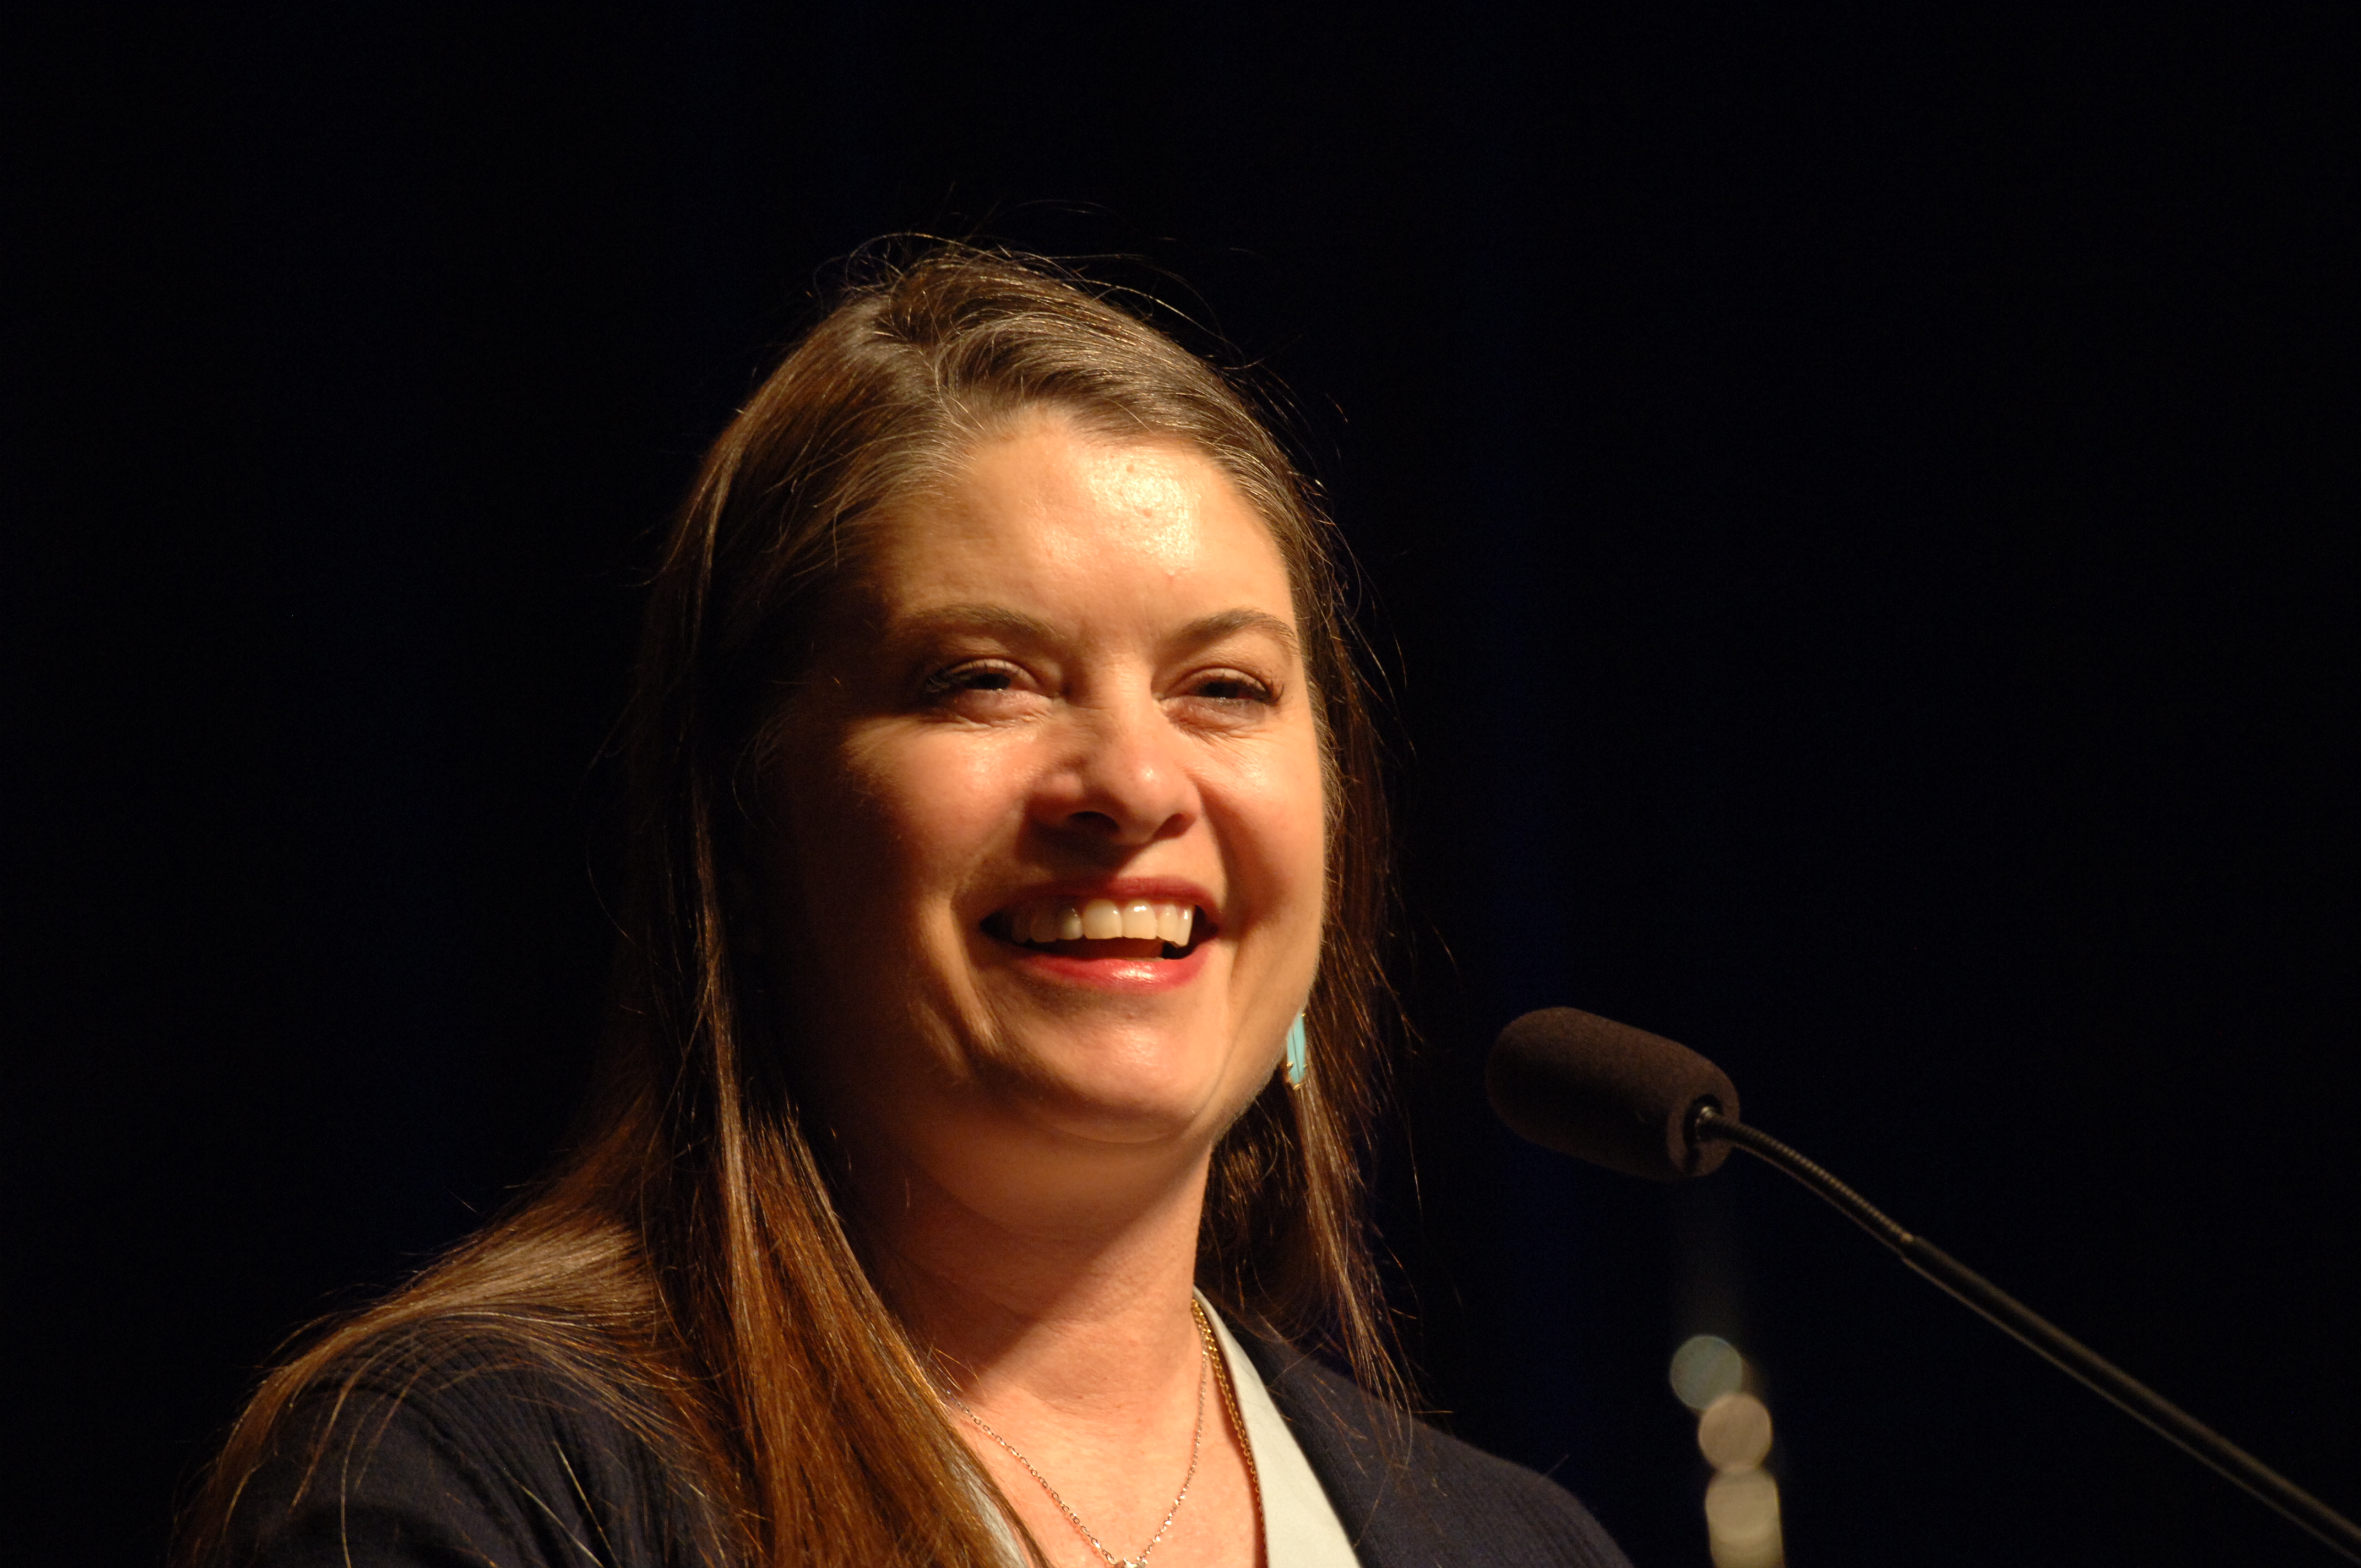 WAI2018 speaker Lynne Hopper